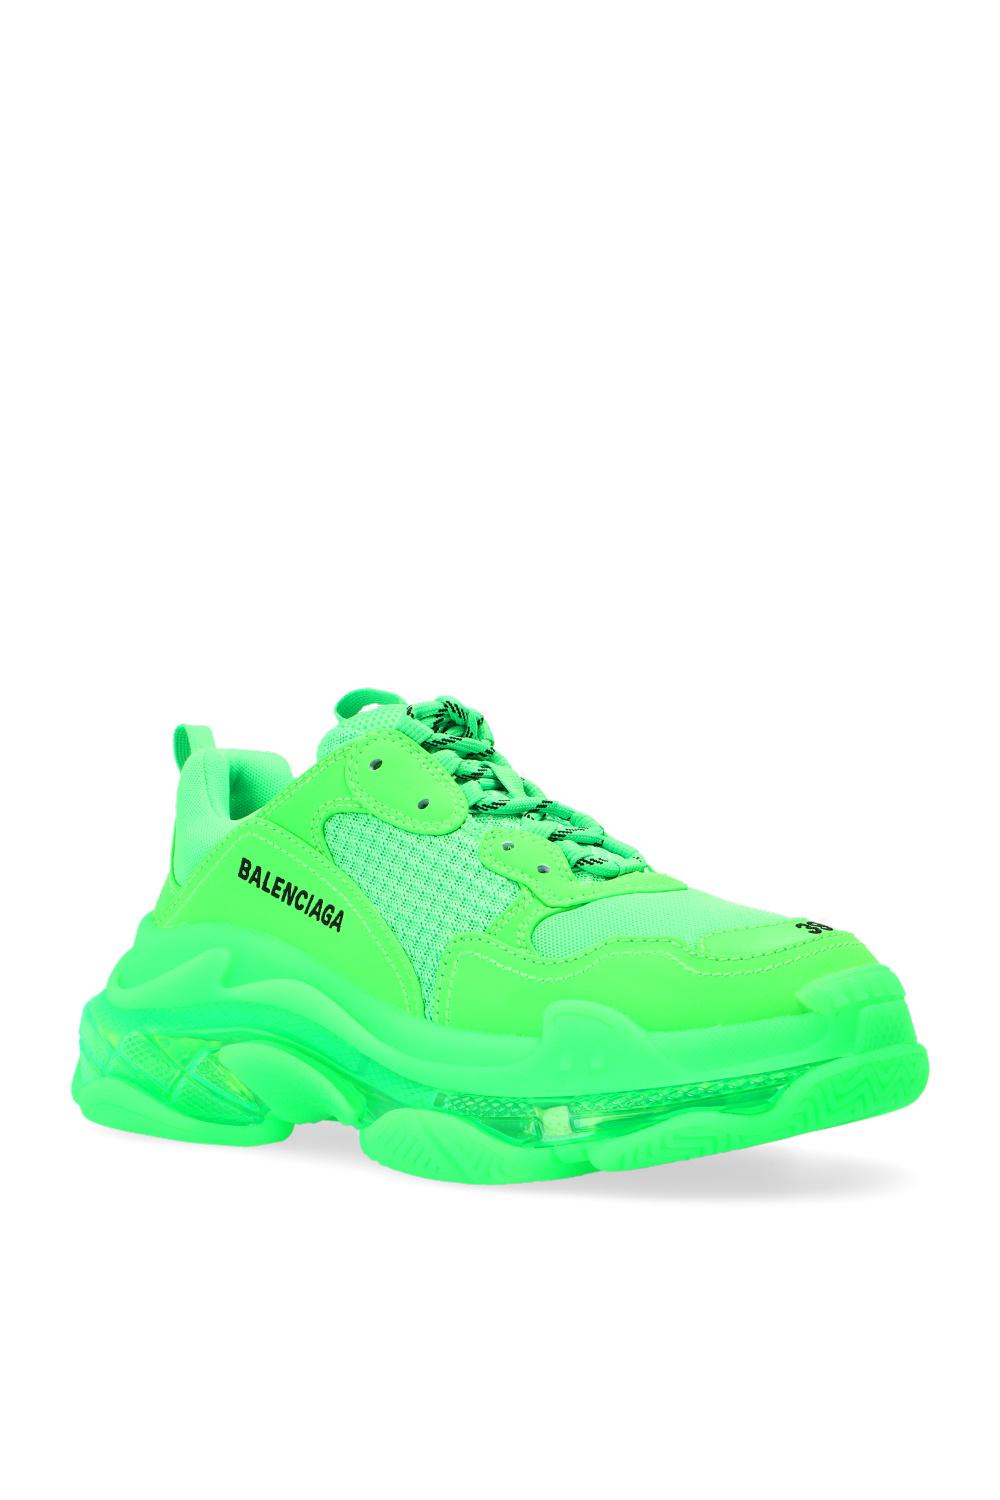 Balenciaga 'triple S' Sneakers in Neon (Green) | Lyst